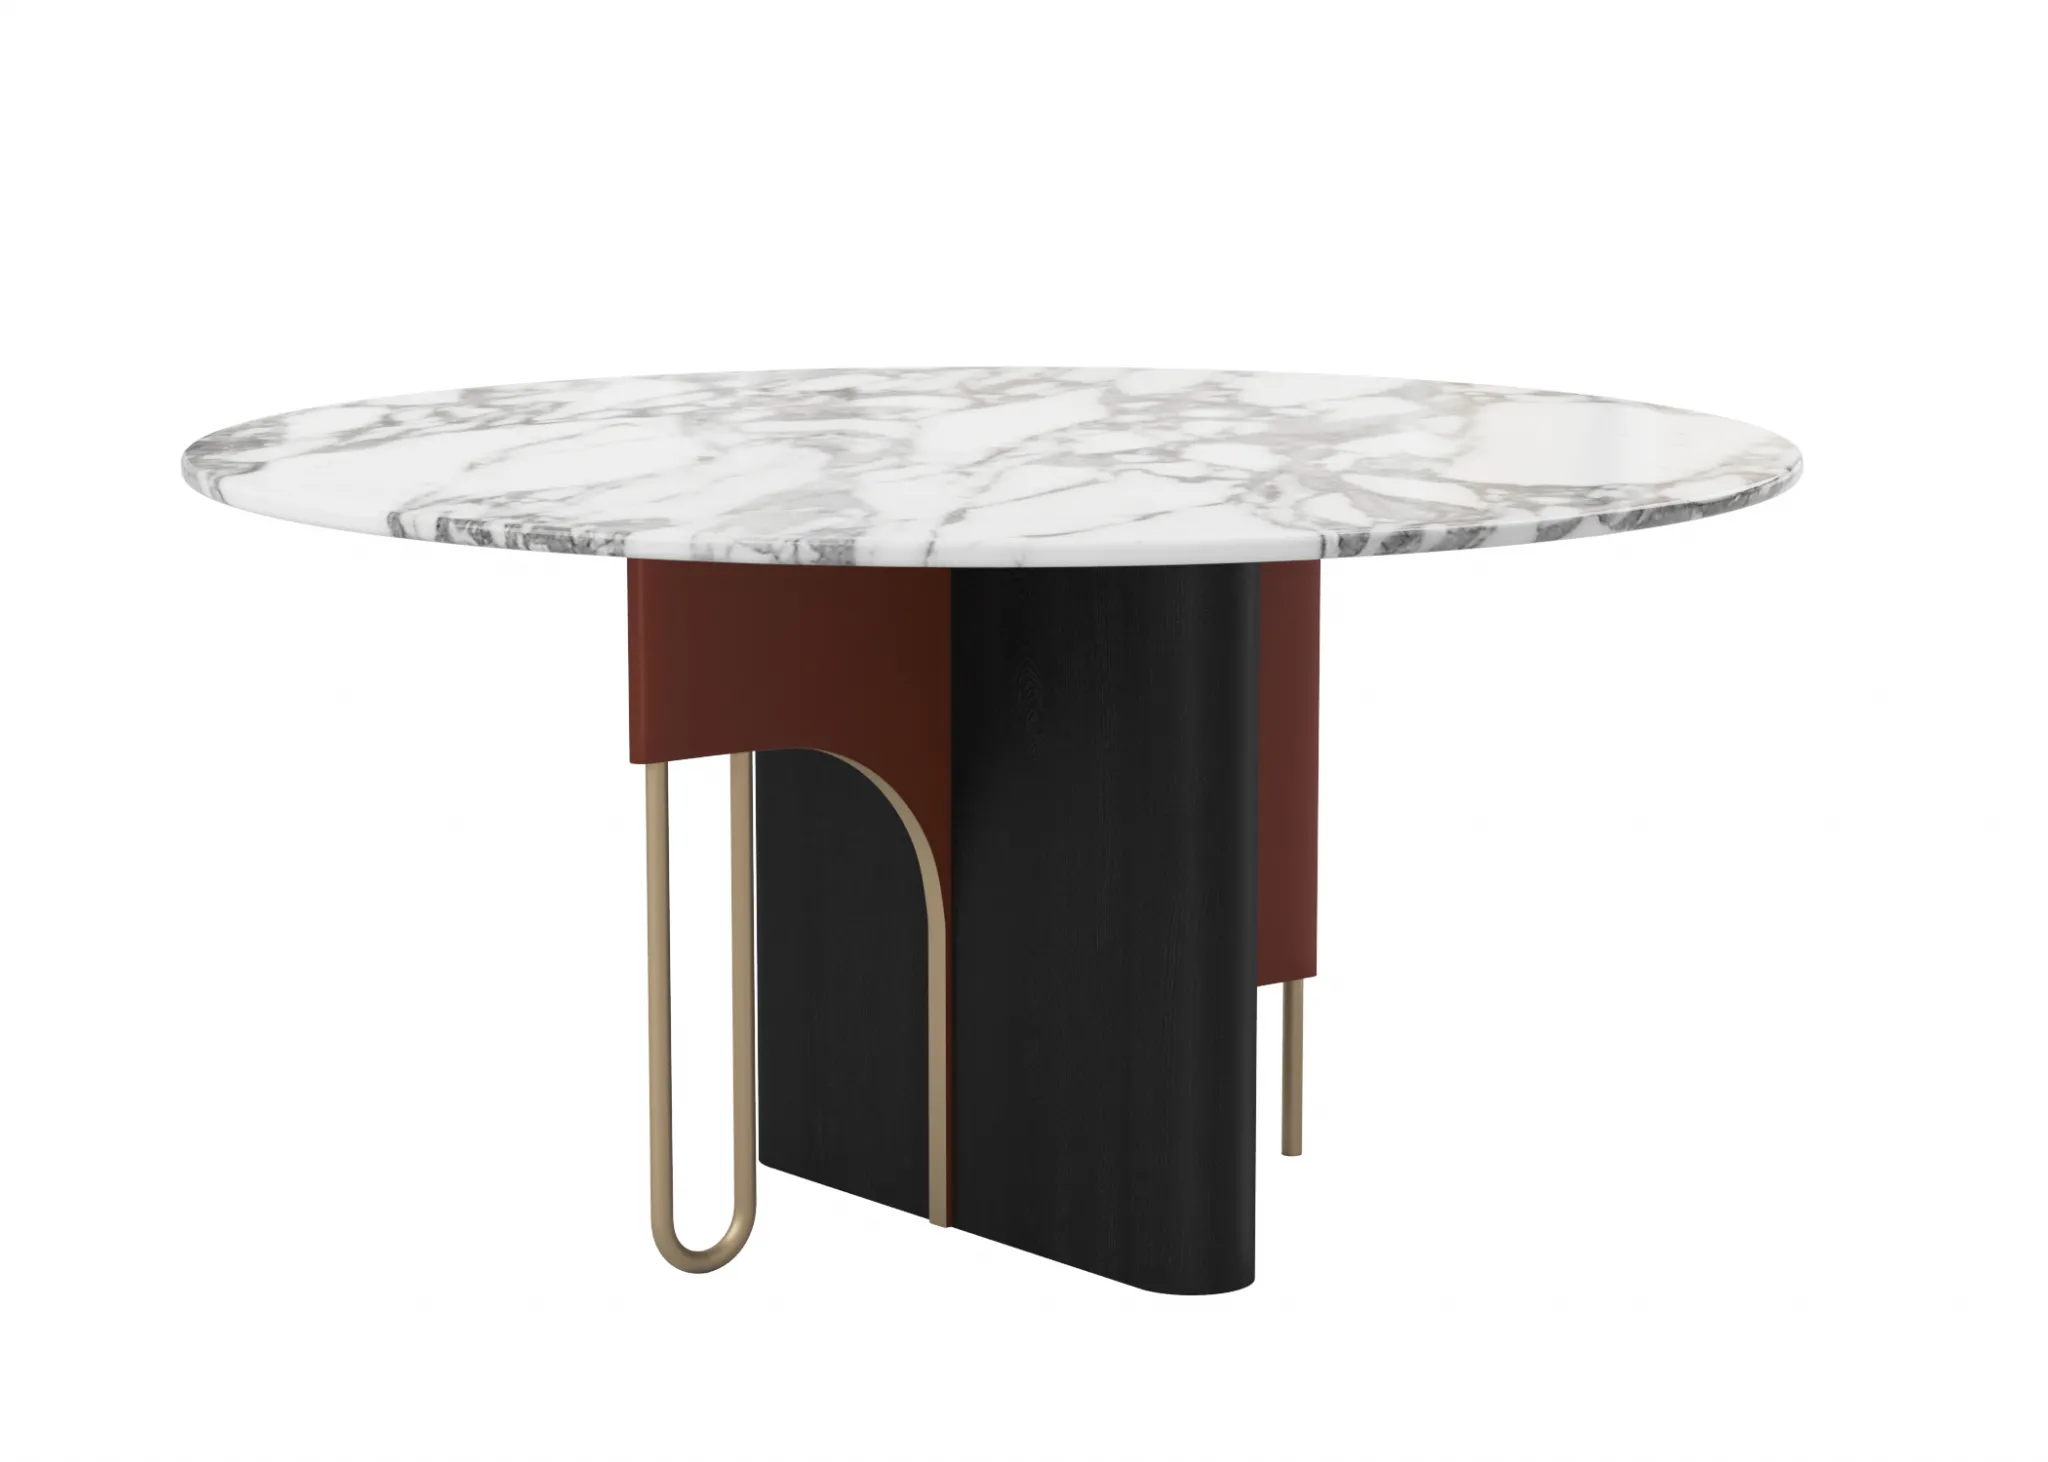 FURNITURE 3D MODELS – TABLES – 0226